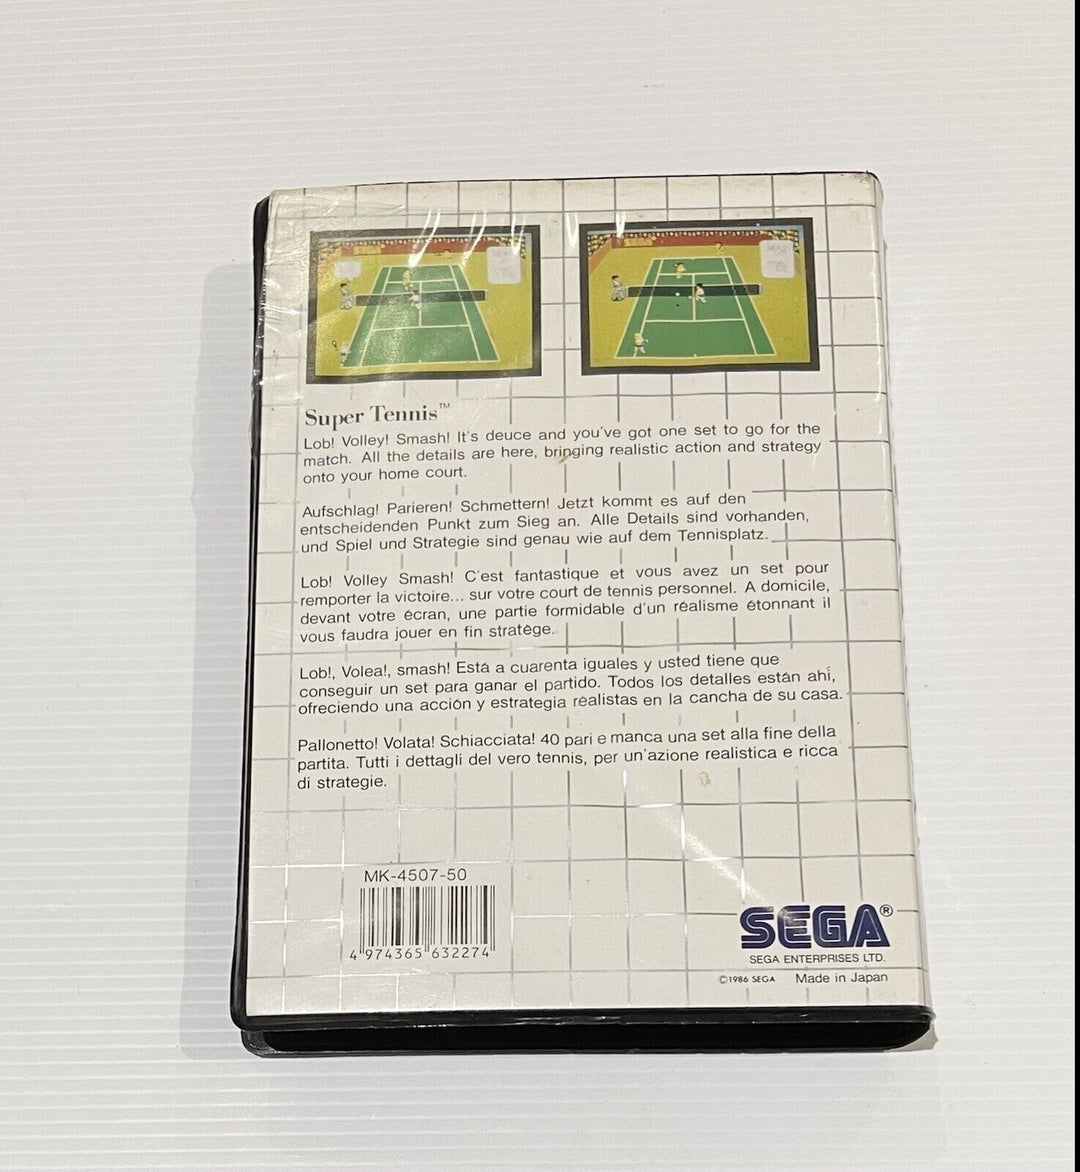 Super Tennis the Sega Cartridge - Sega Master System Game - PAL - FREE POST!